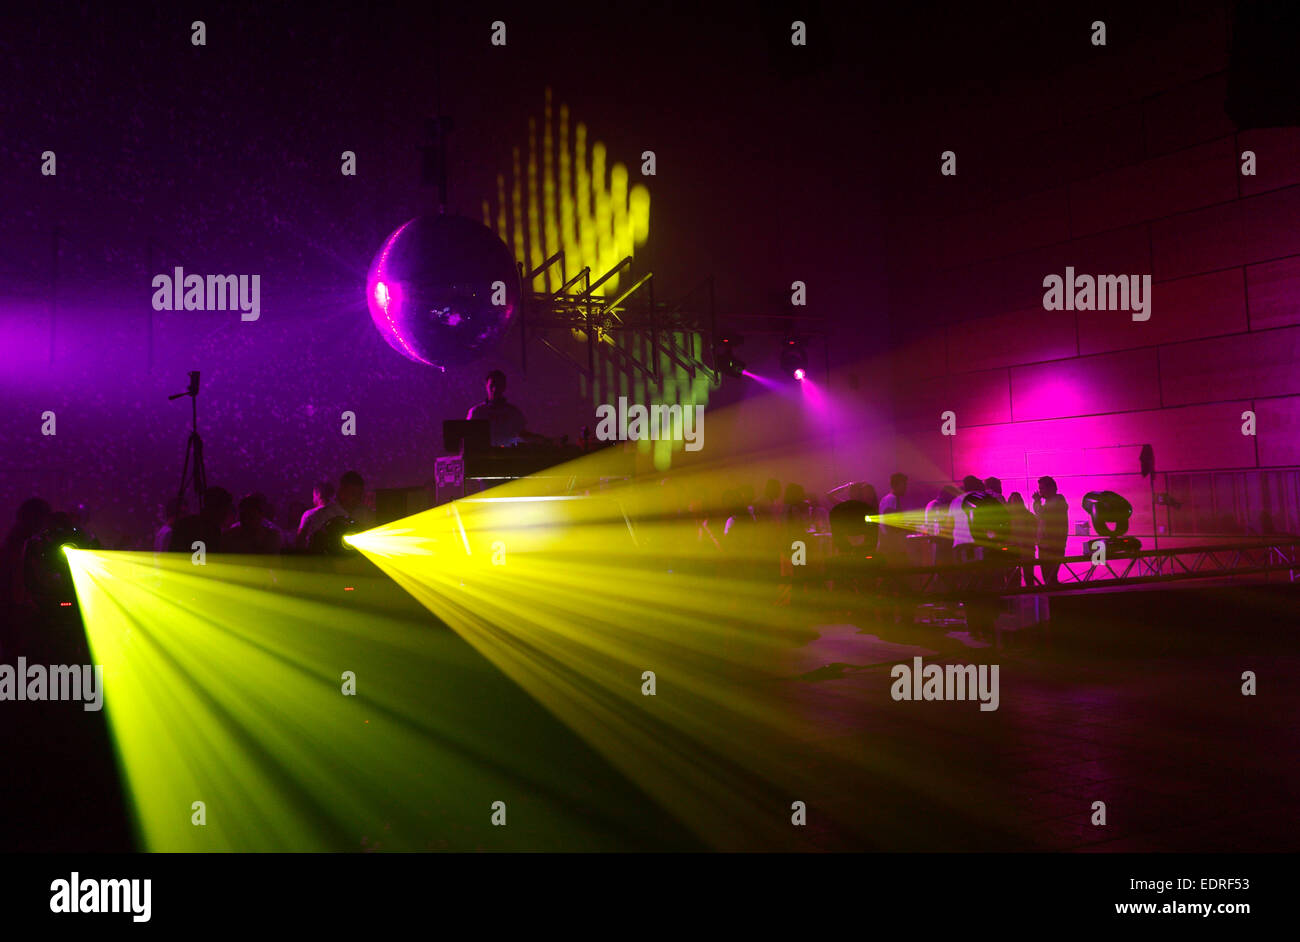 https://c8.alamy.com/compfr/edrf53/la-lumiere-laser-disco-lights-edrf53.jpg